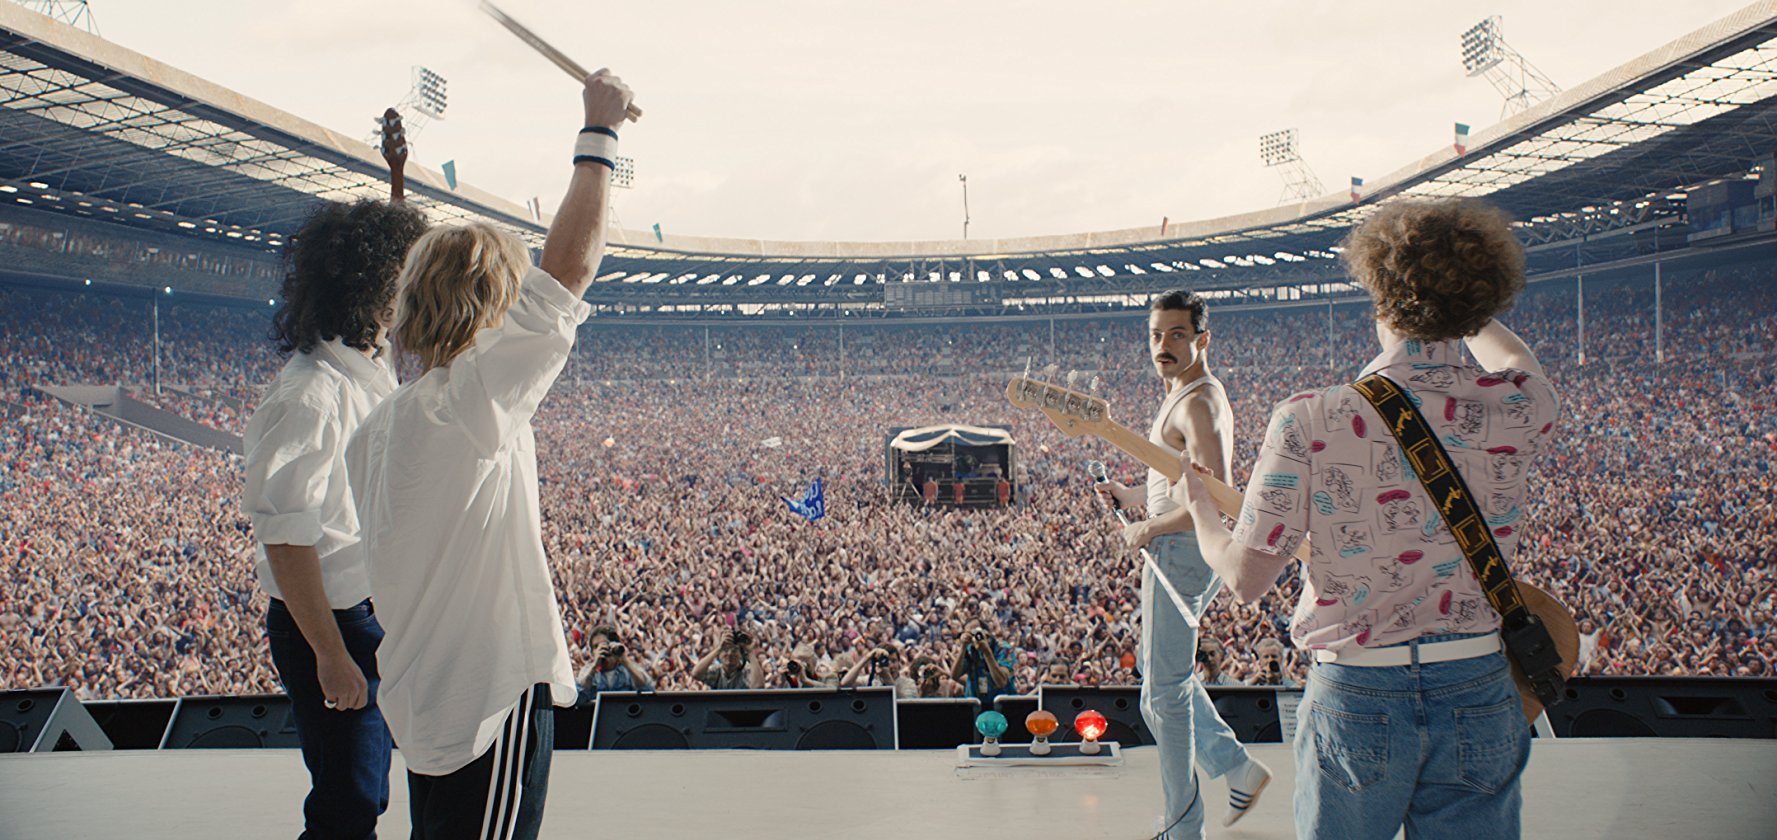 The 1 Big Problem Freddie Mercury Fans Already Have With the ‘Bohemian Rhapsody’ Movie